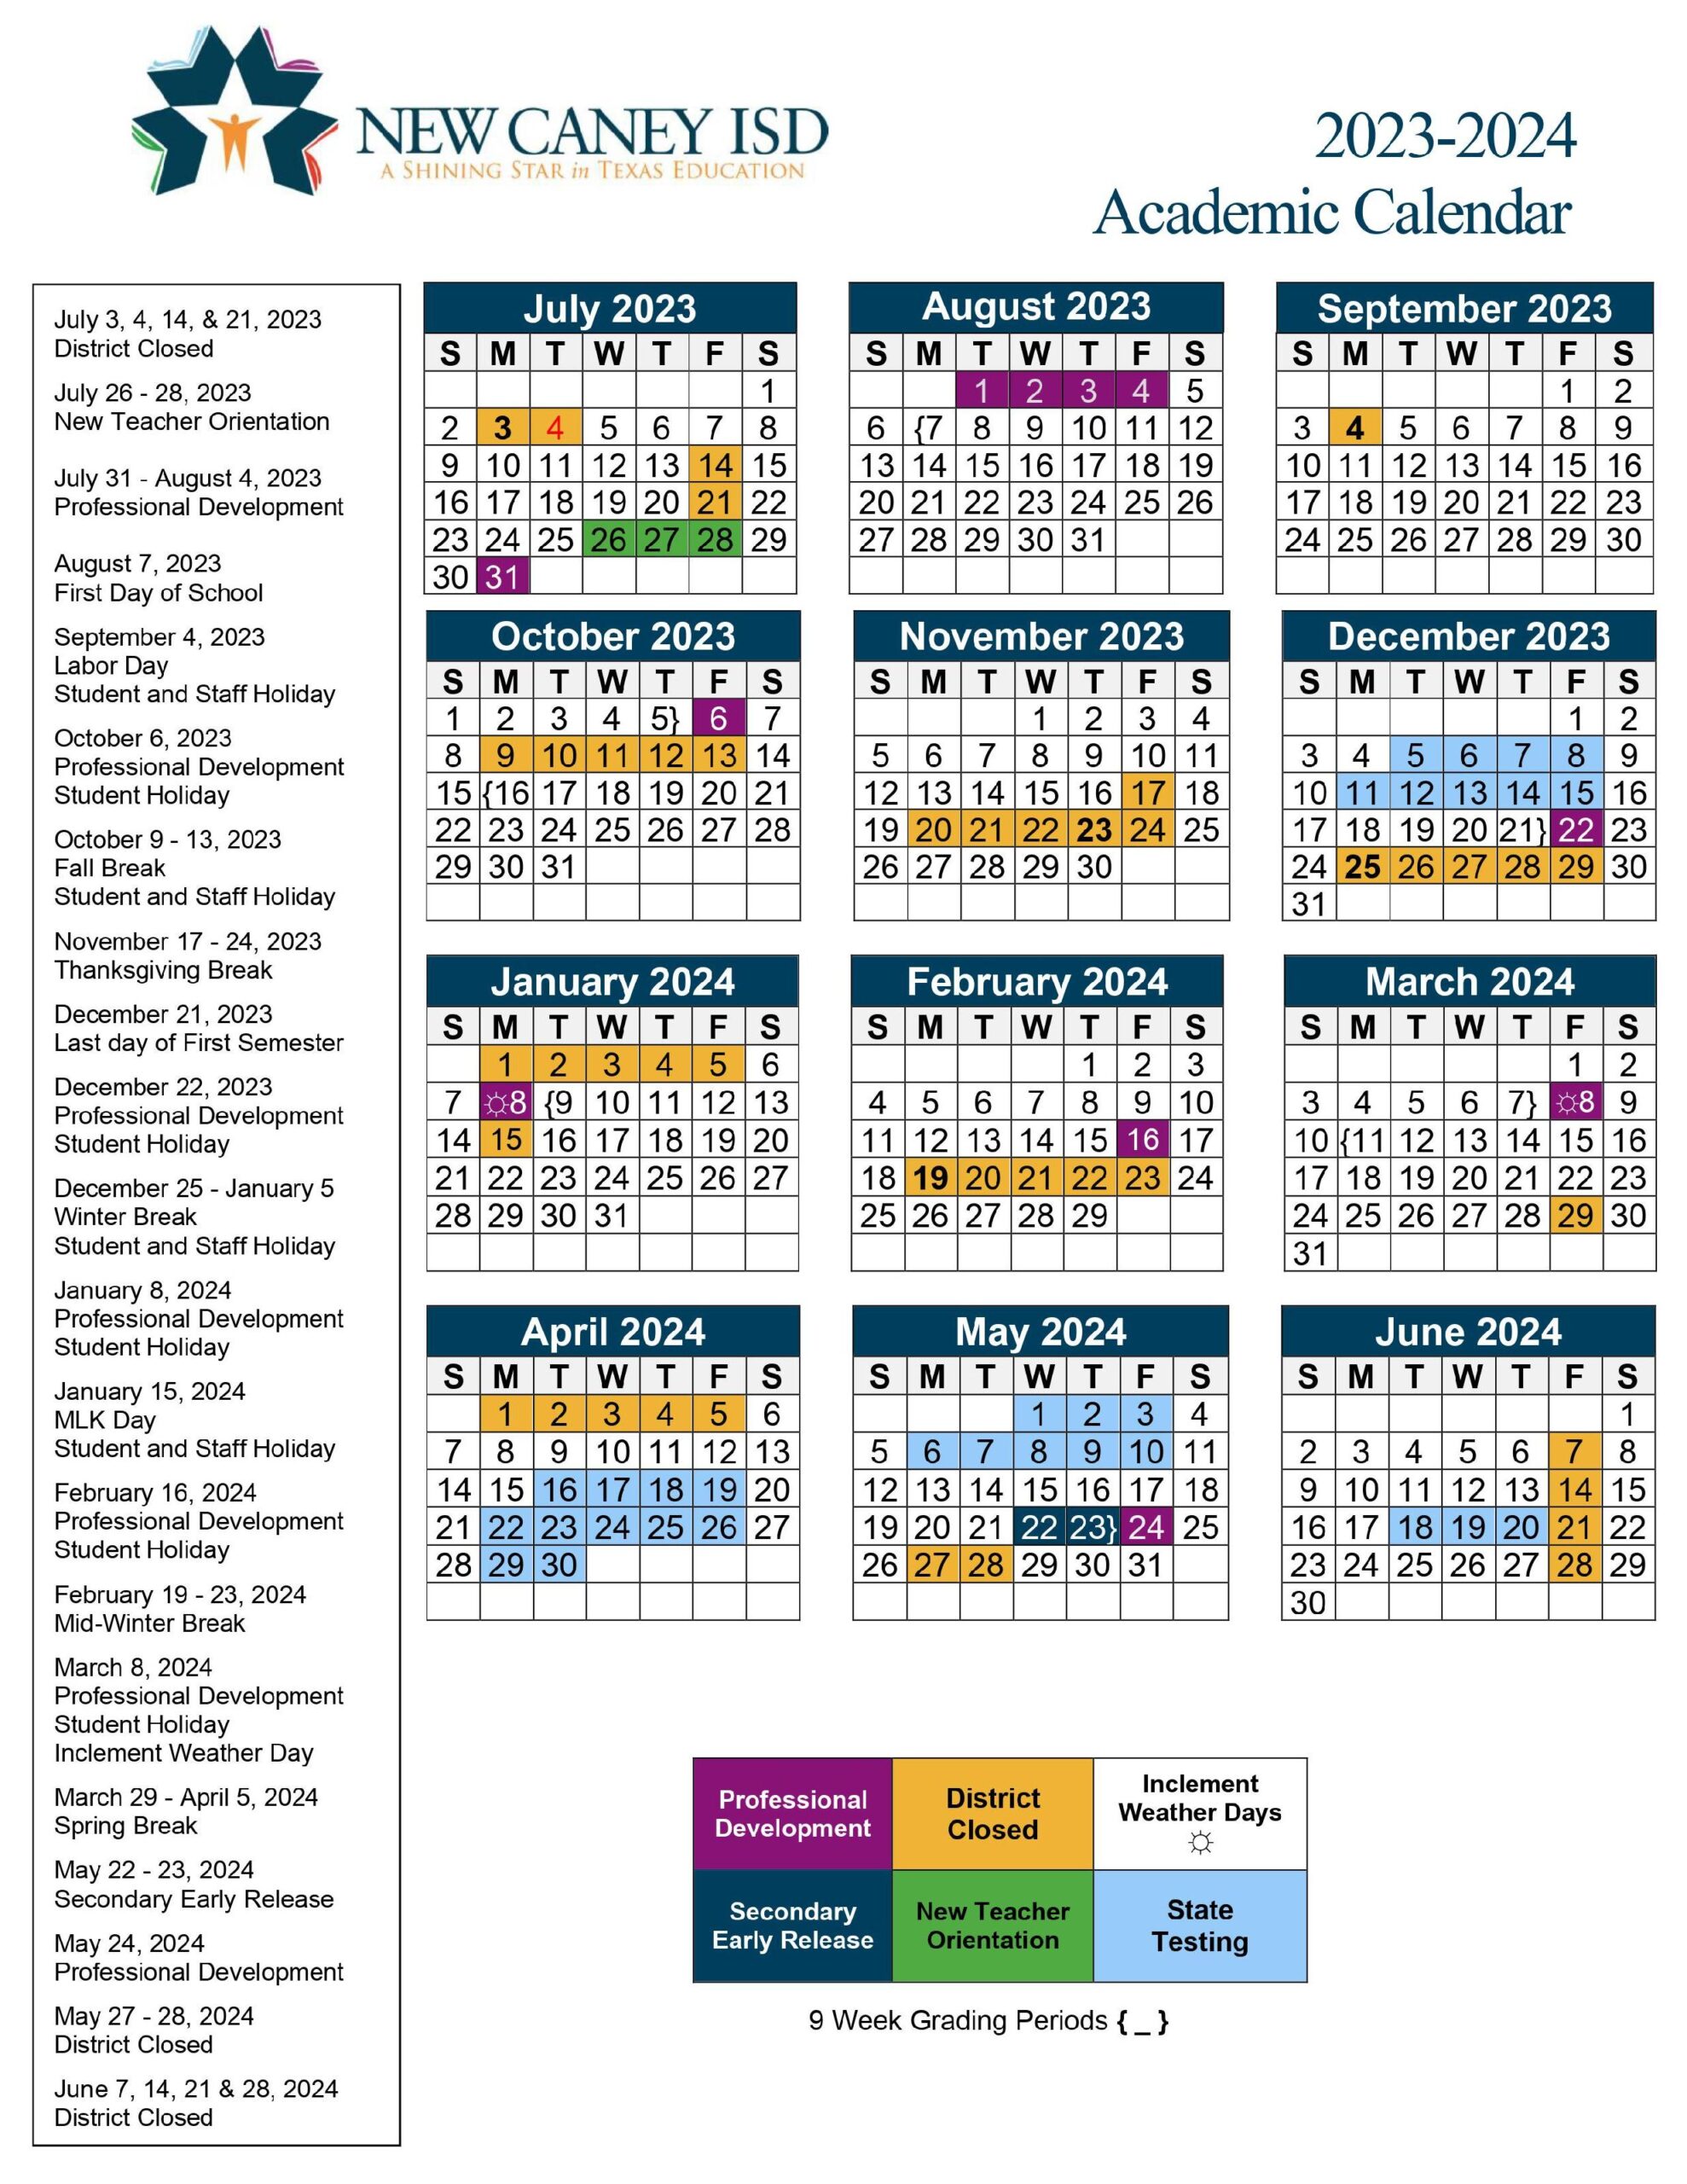 New Caney Independent School District Calendar 2023 2024 PDF